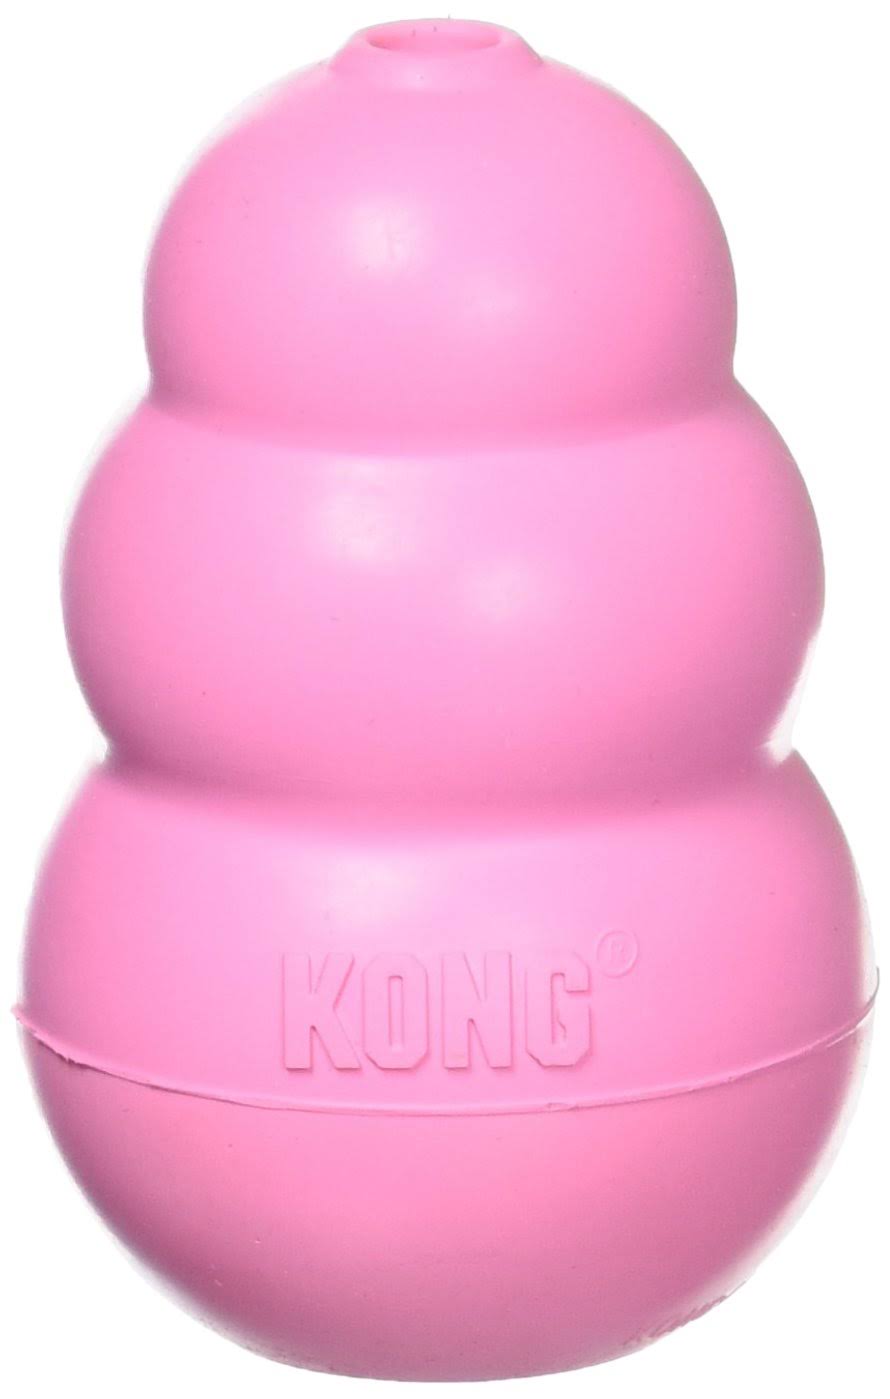 Kong Puppy Toy - Medium